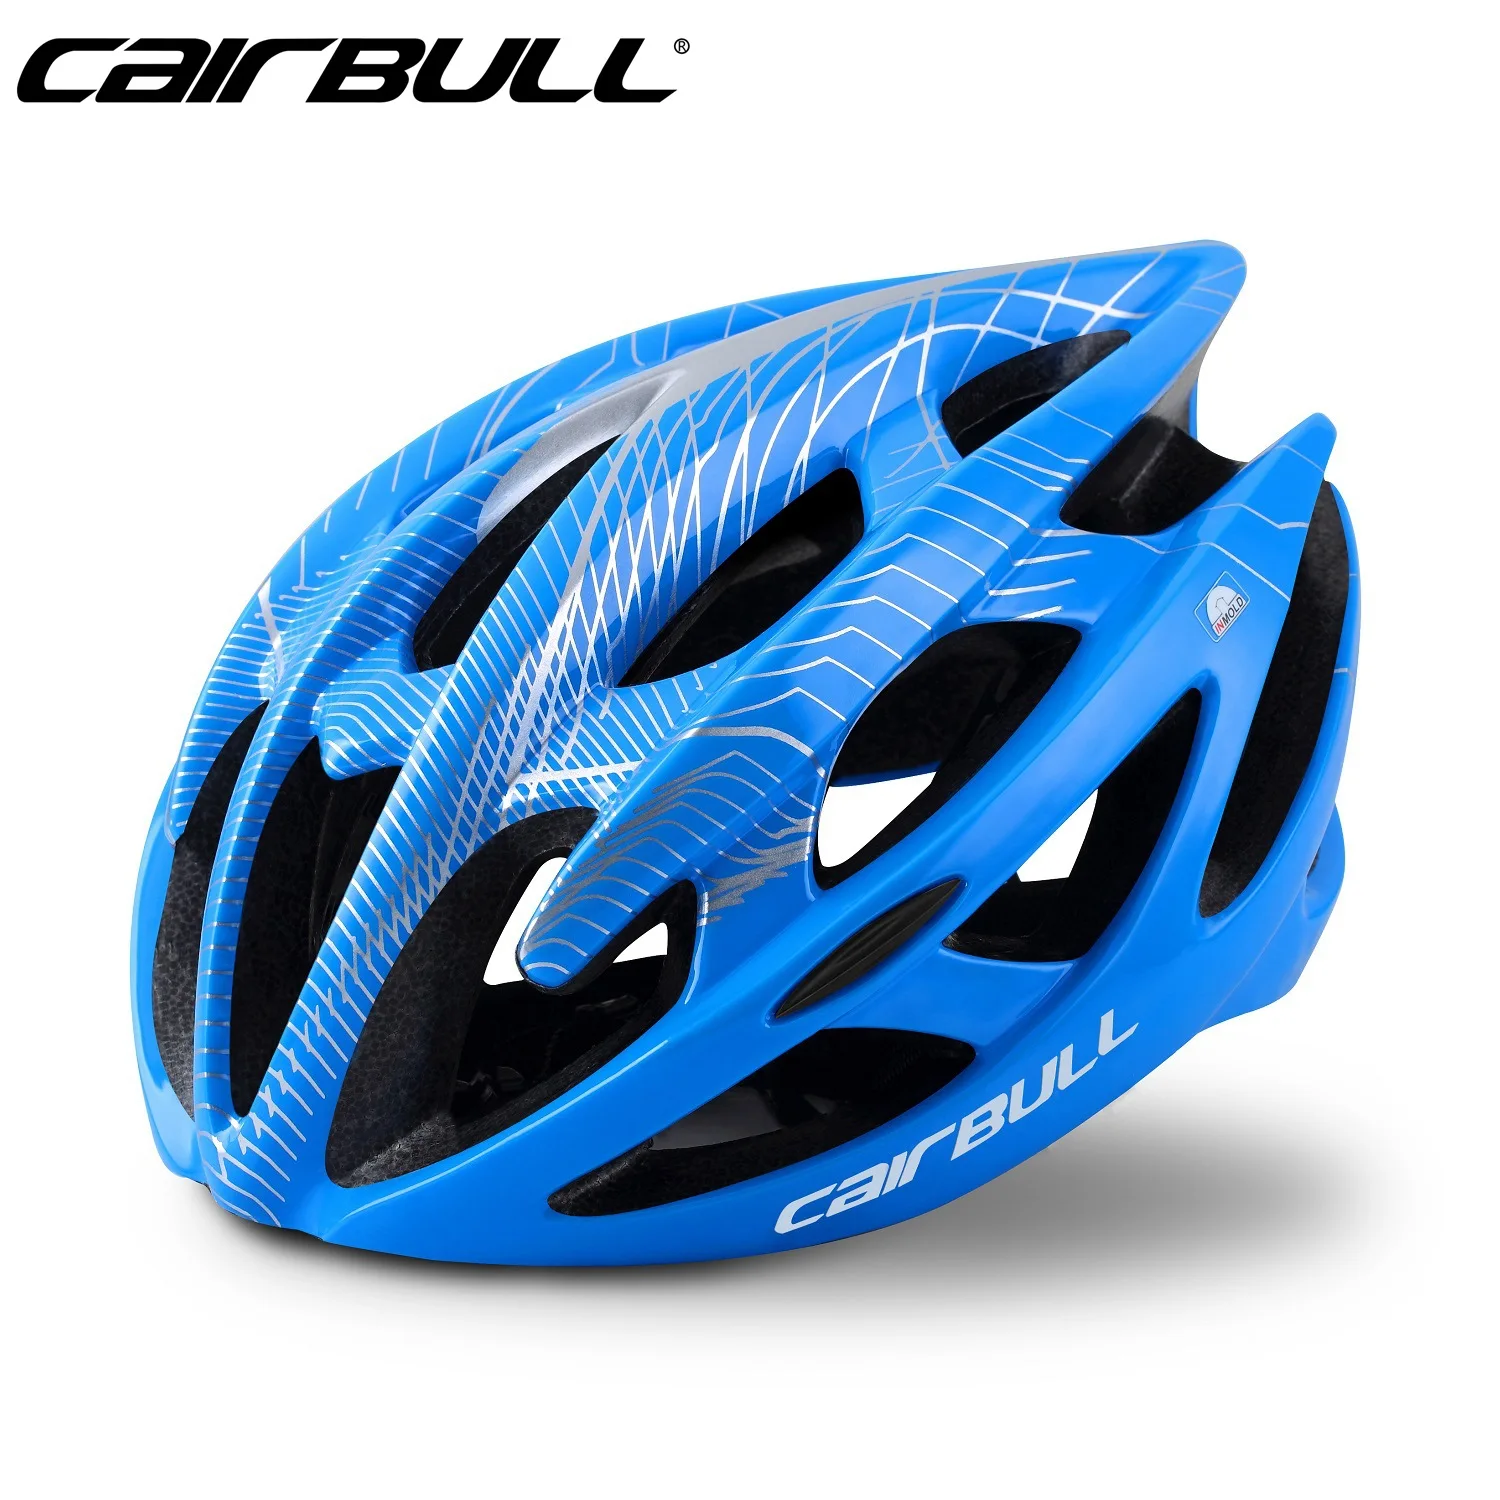 2020 Cairbull ultralight bicycle helmet DH Atv adult mtb mountain race cycling cross enduro helmet road bike parts accessories